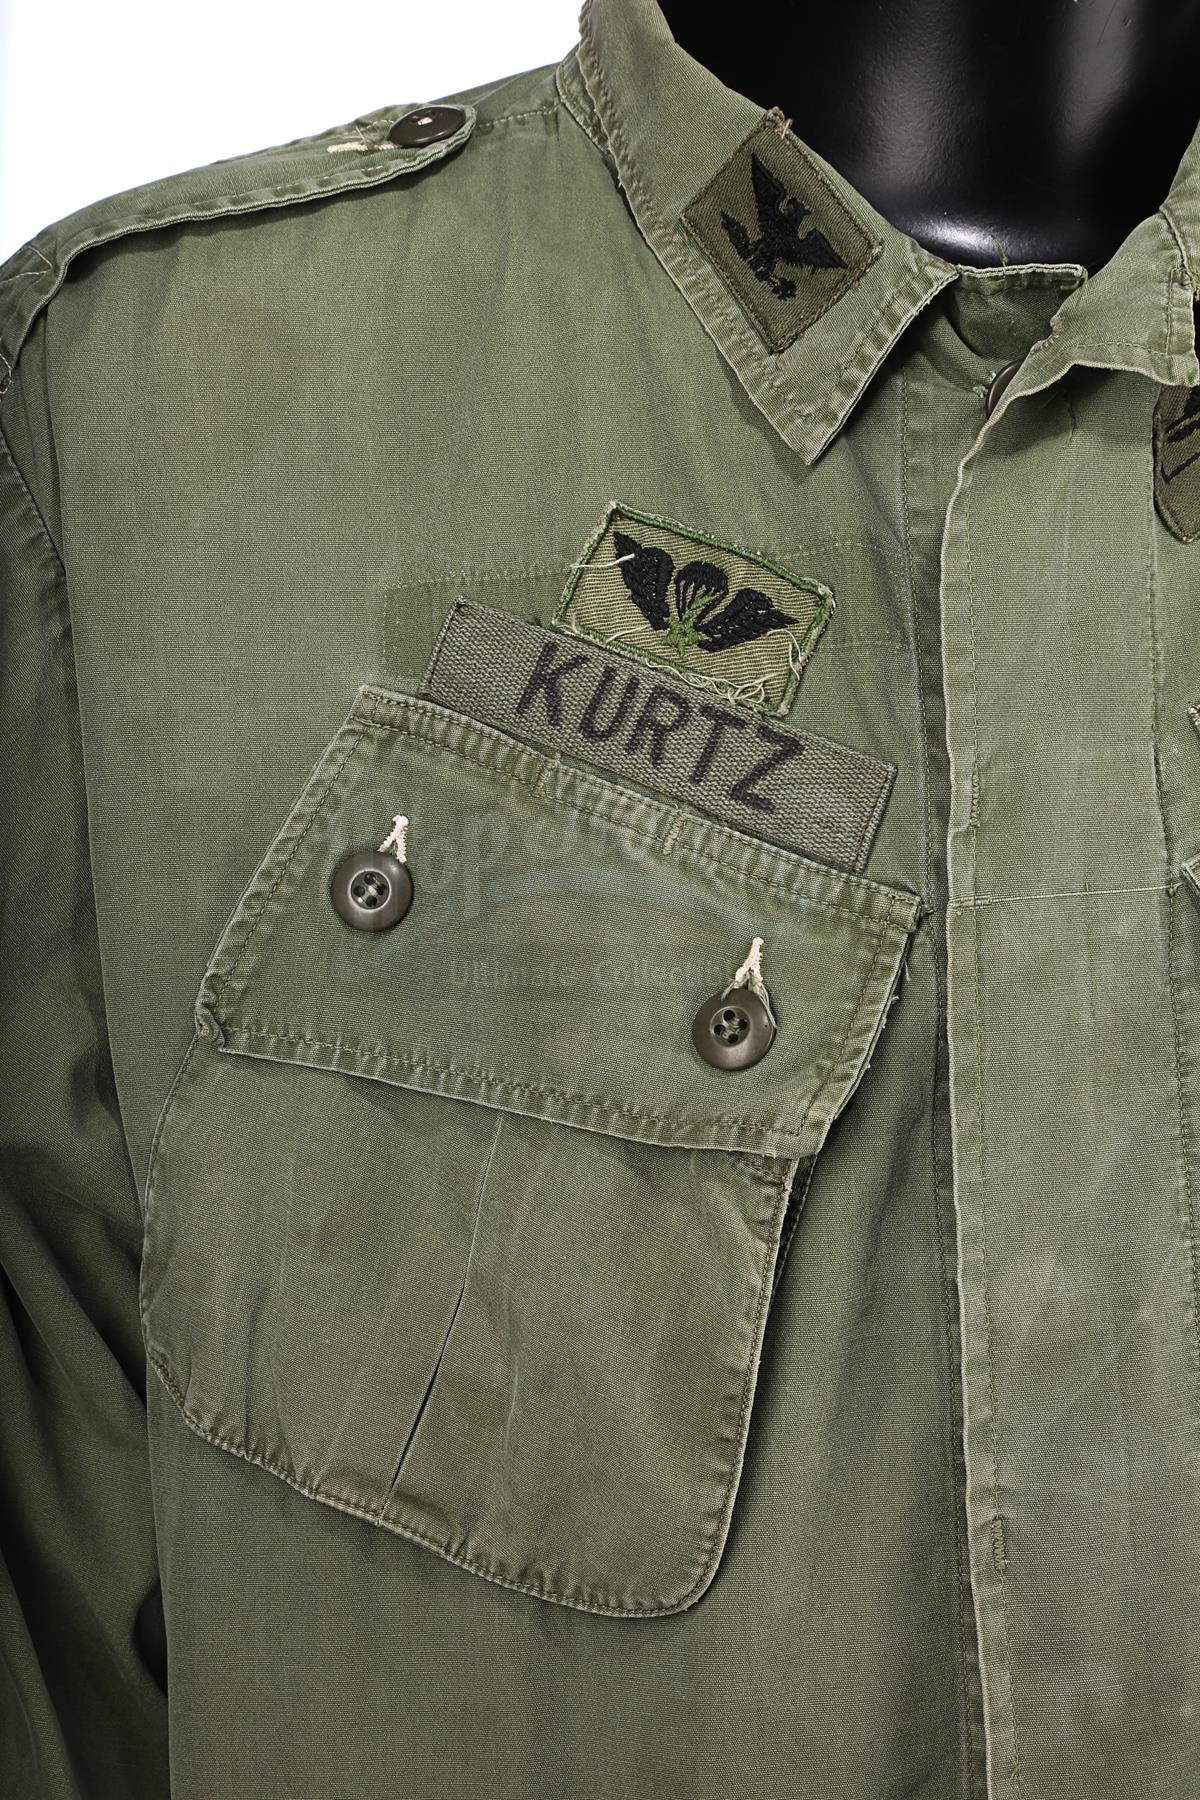 APOCALYPSE NOW (1979) - Colonel Walter E. Kurtz's (Marlon Brando) Screen-Matched Shirt - Image 3 of 11